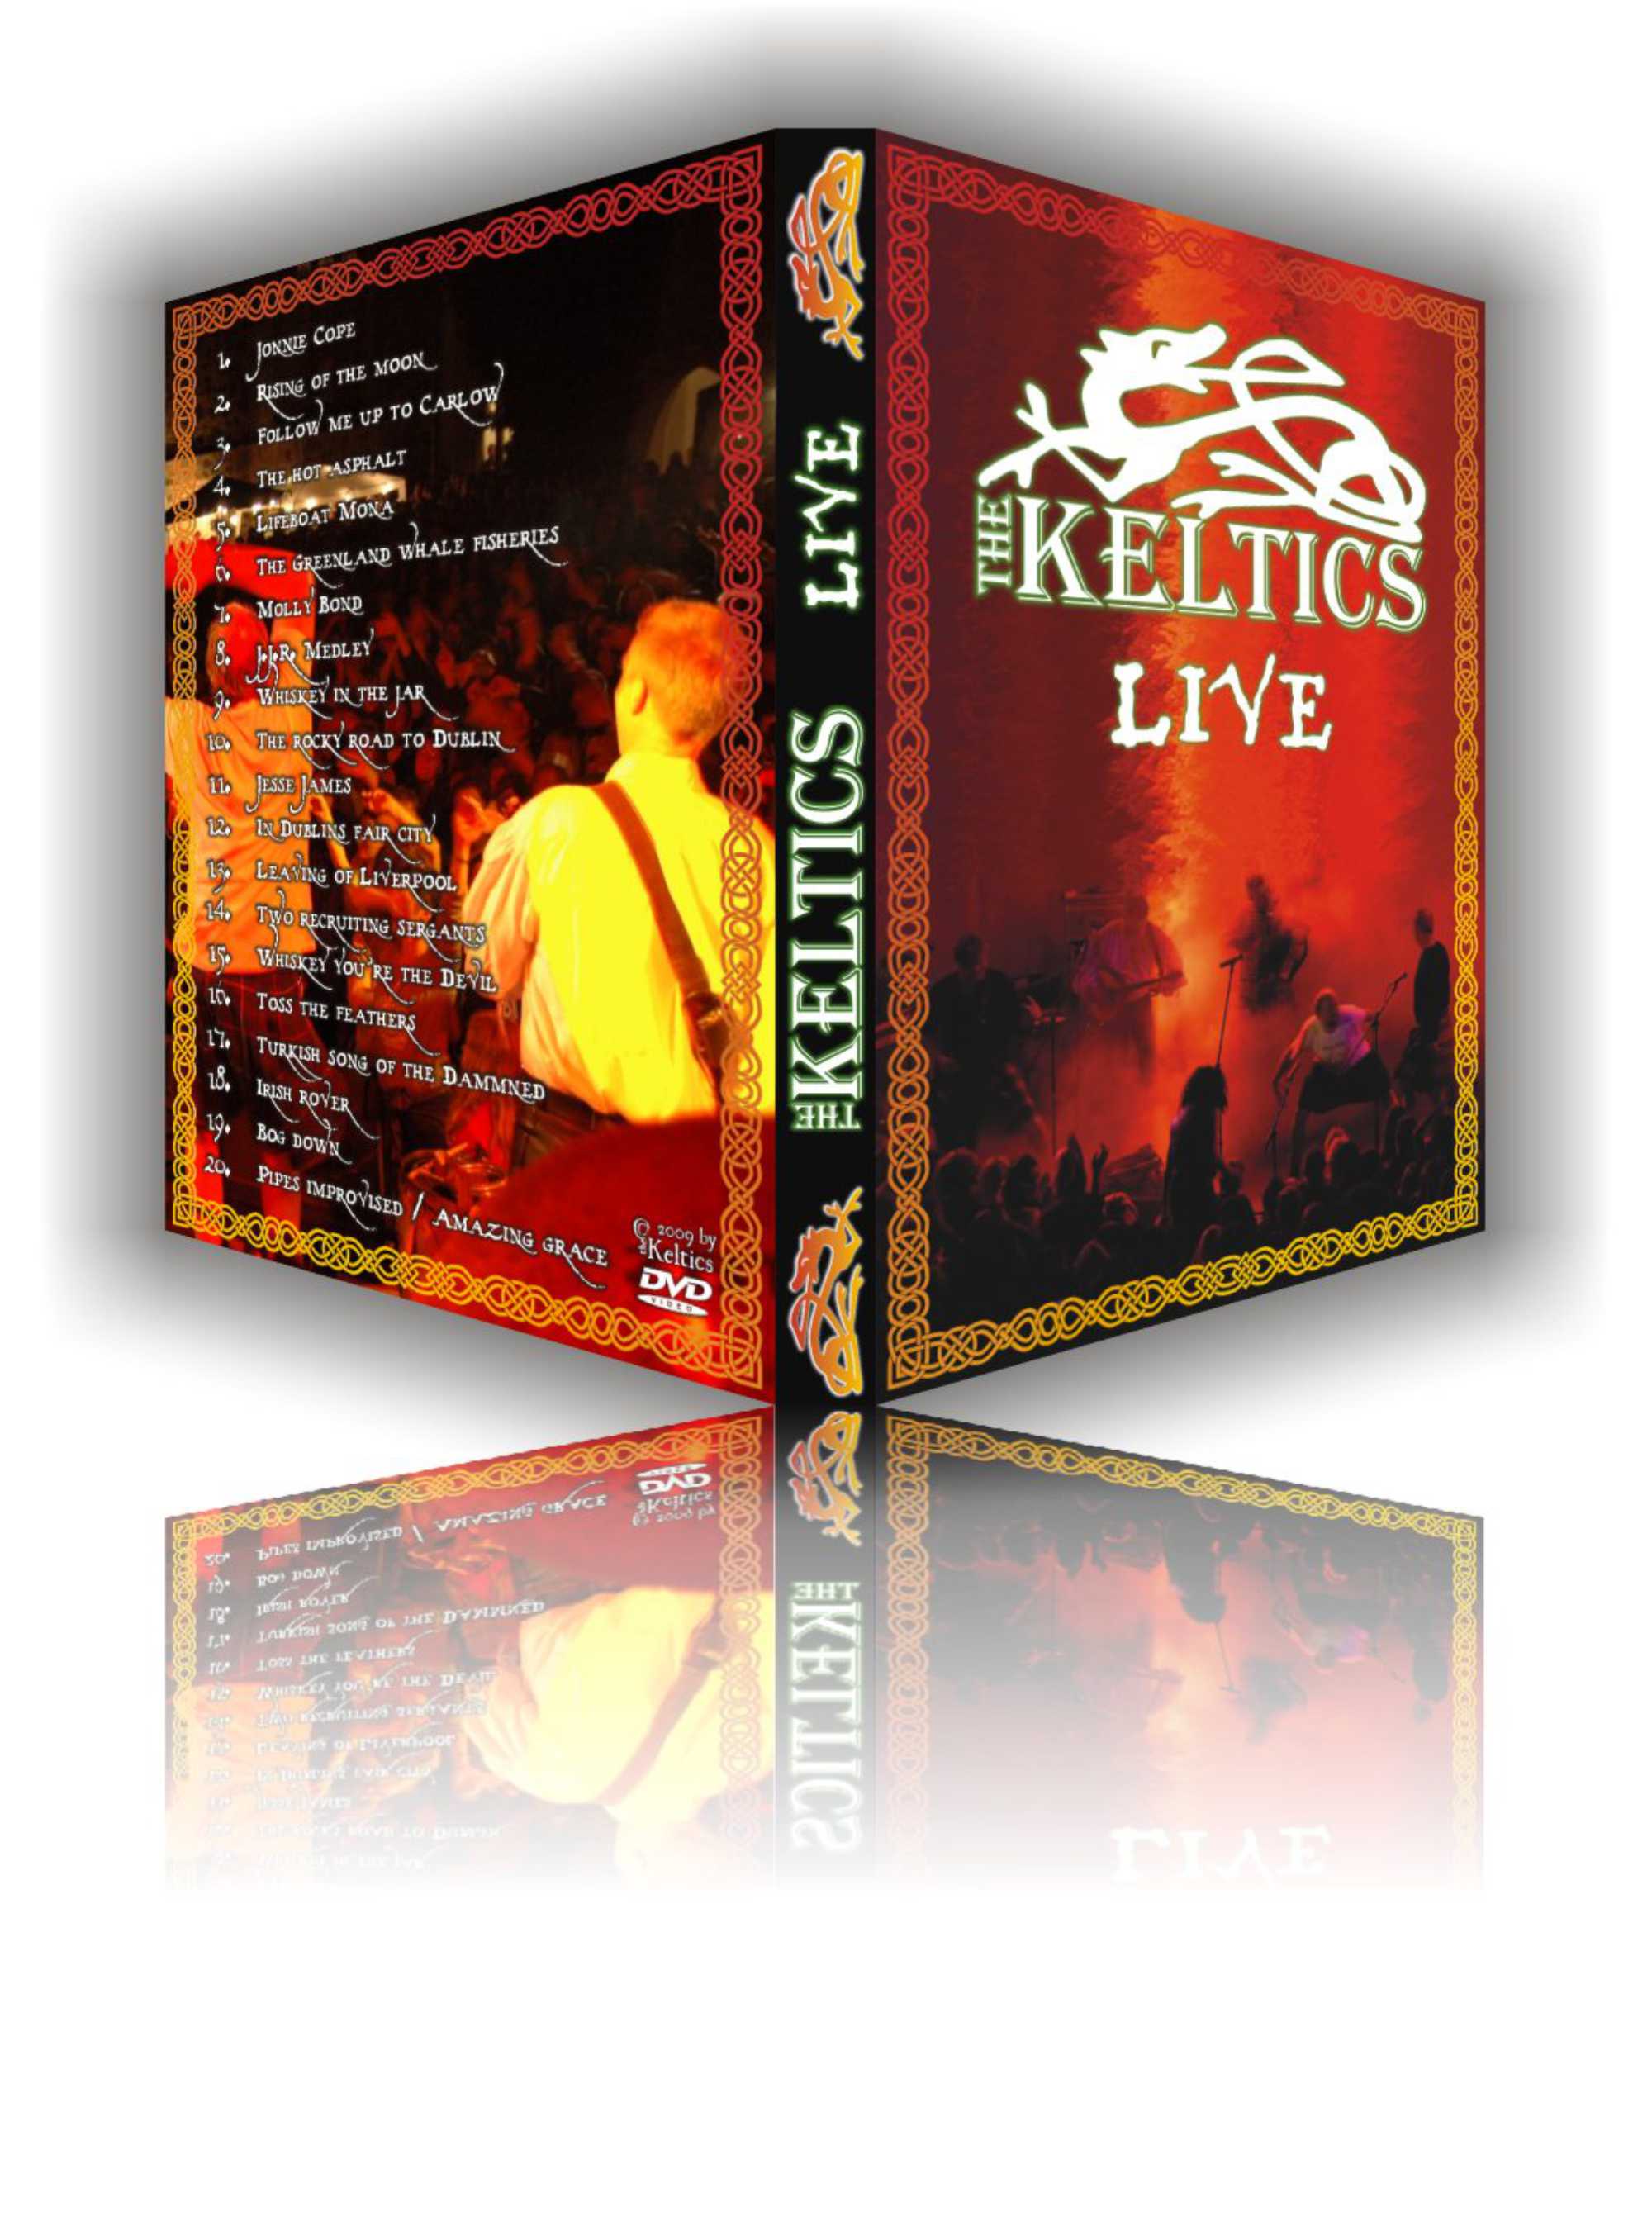 Keltics DVD Cover